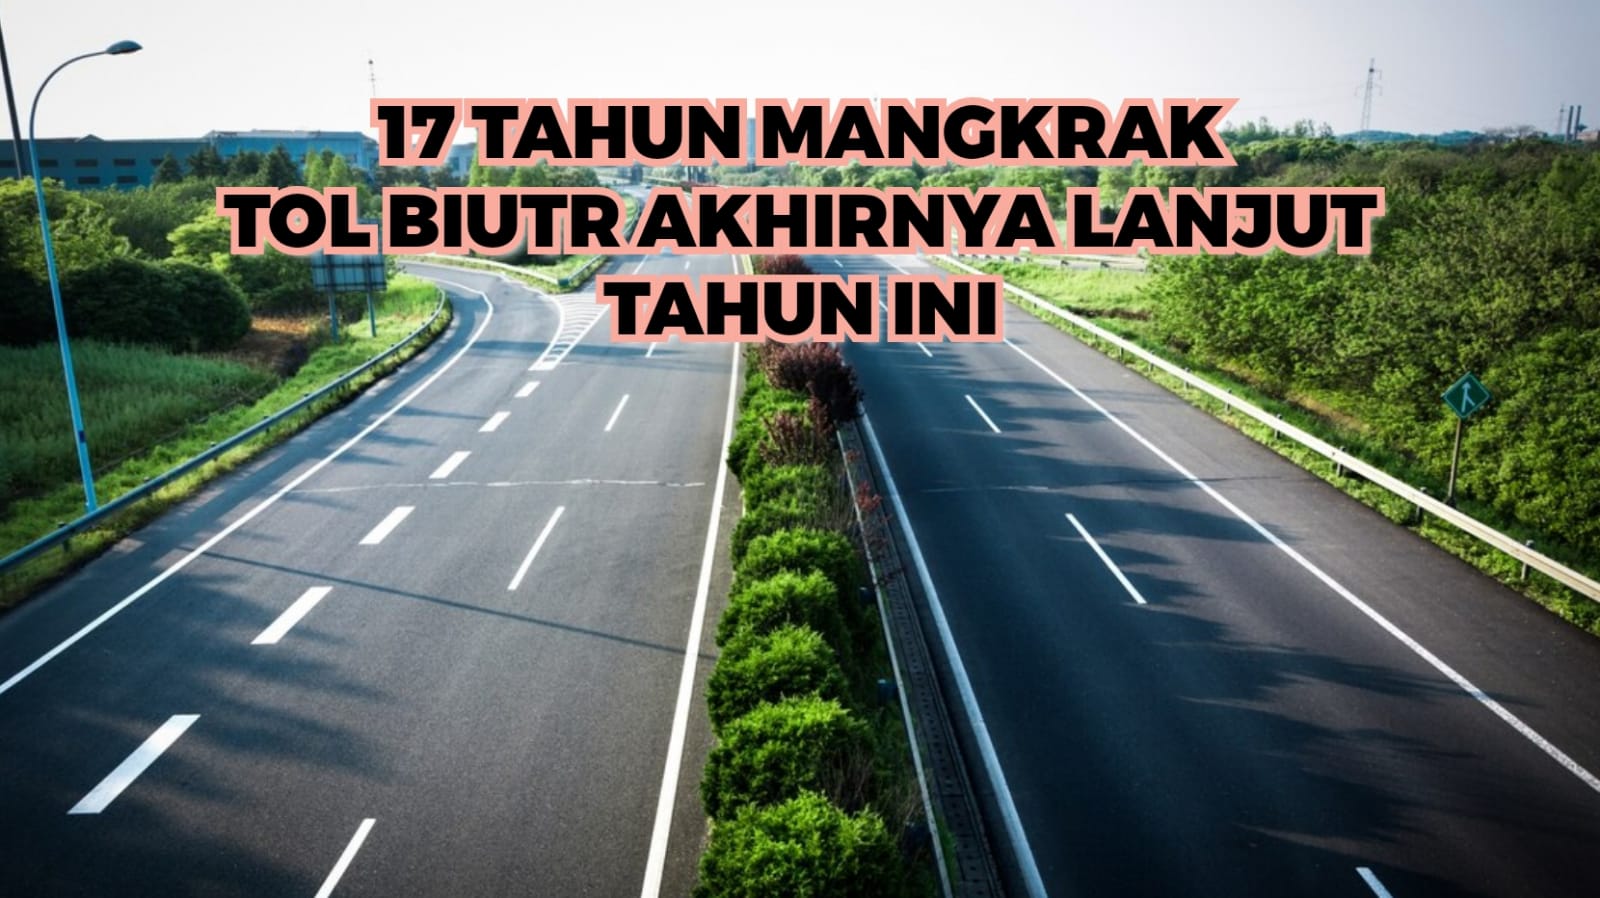 Alhamdullilah 17 Tahun Mangkrak Pembangunan Jalan Tol dalam Kota Bandung Dilanjutkan Tahun Ini